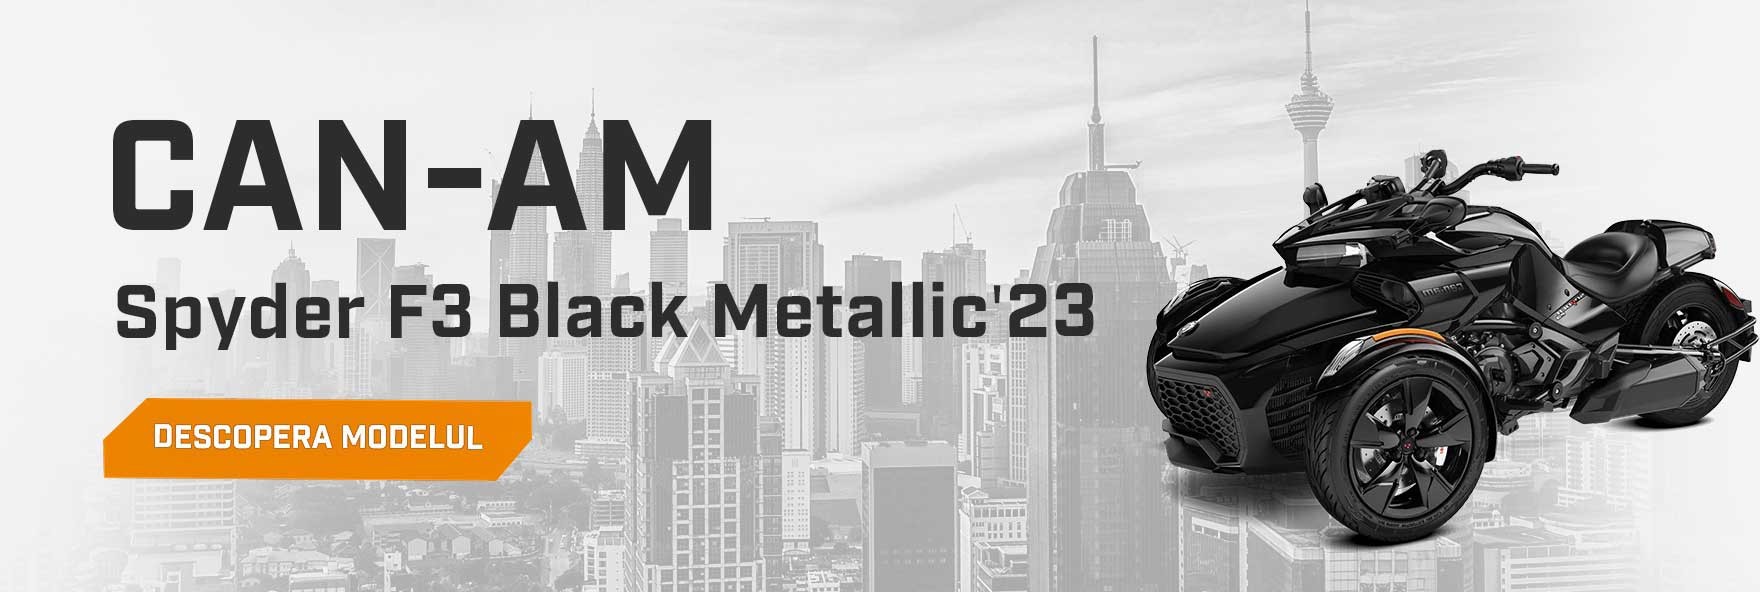 Can-Am Spyder F3 Steel Black Metallic '23